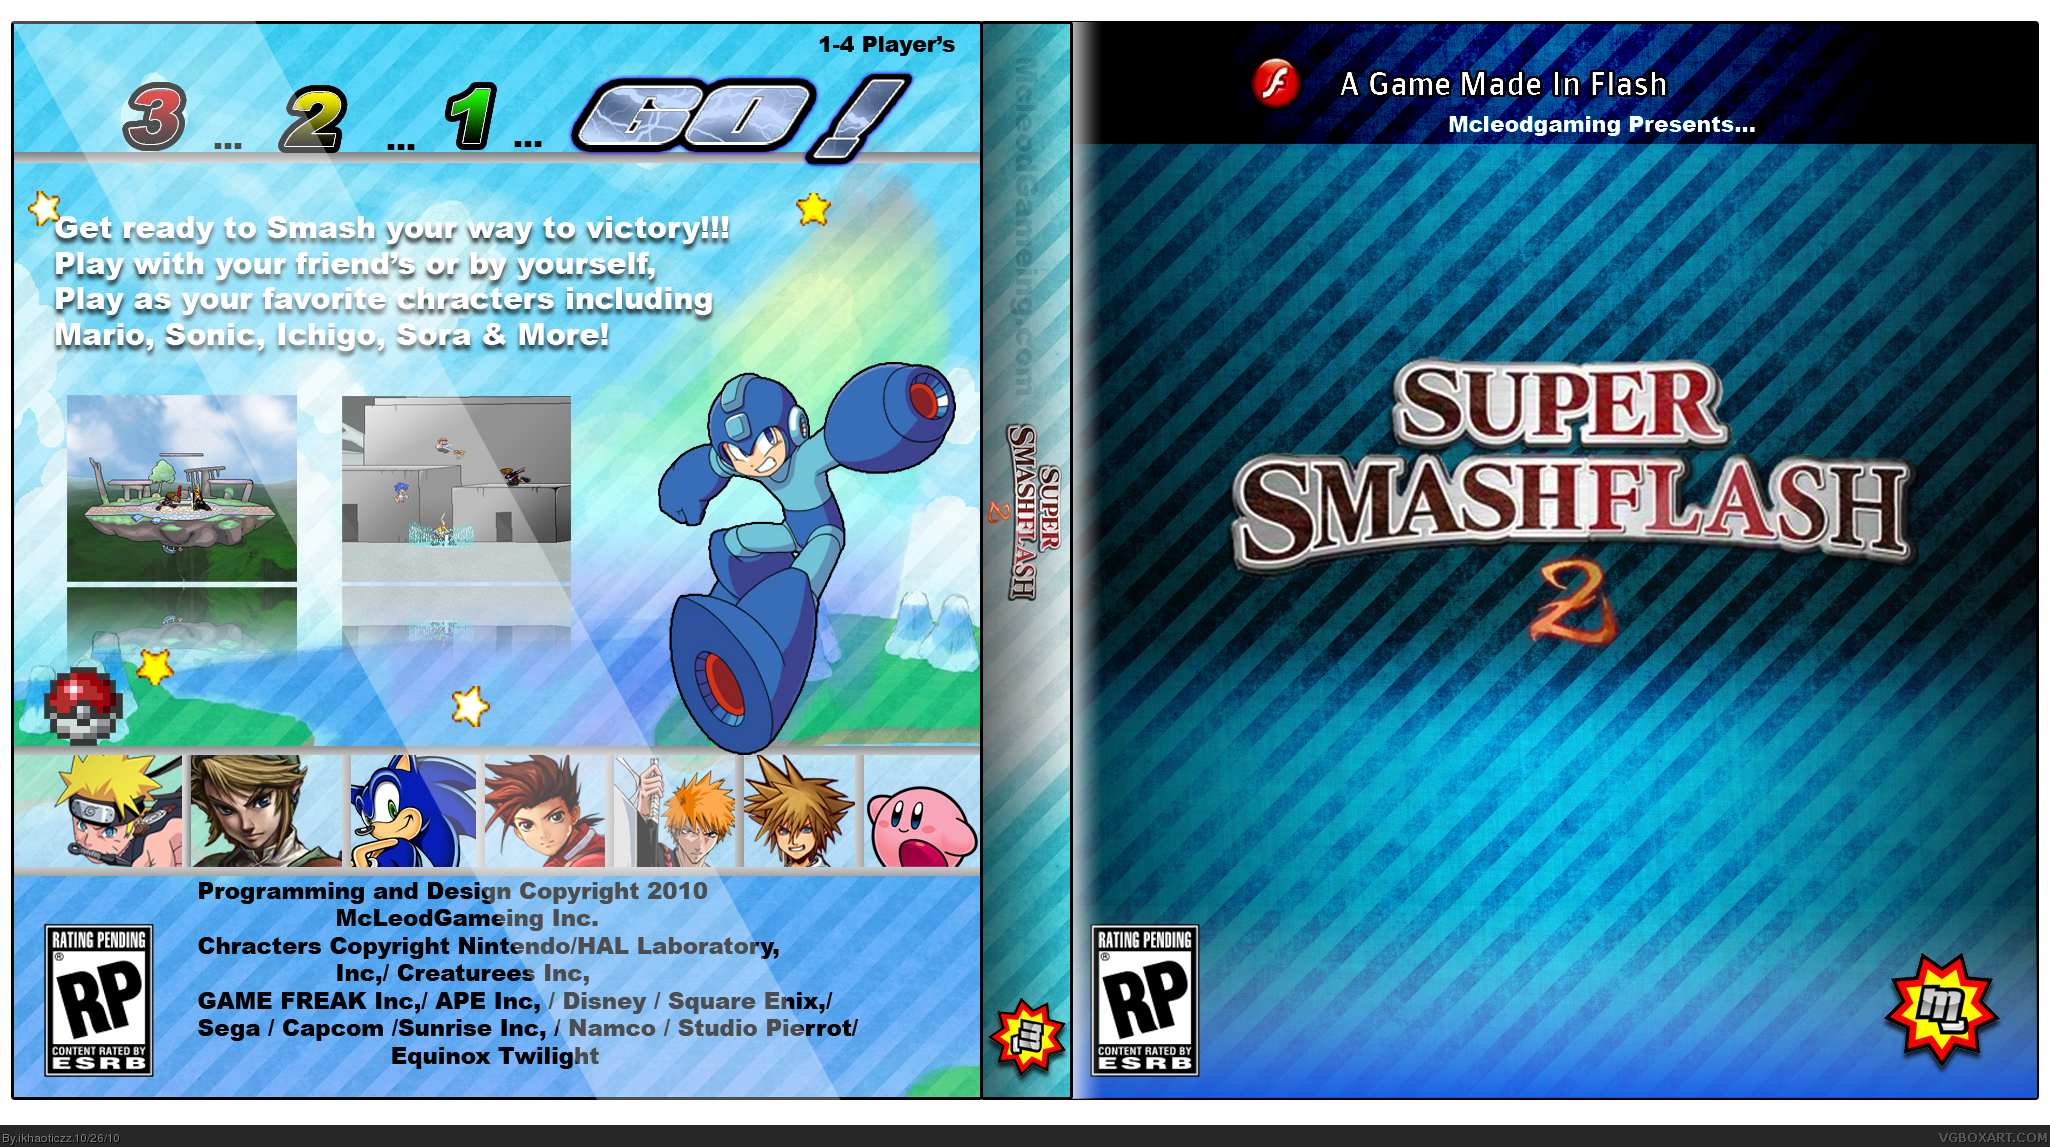 Super smash flash 2 beta download